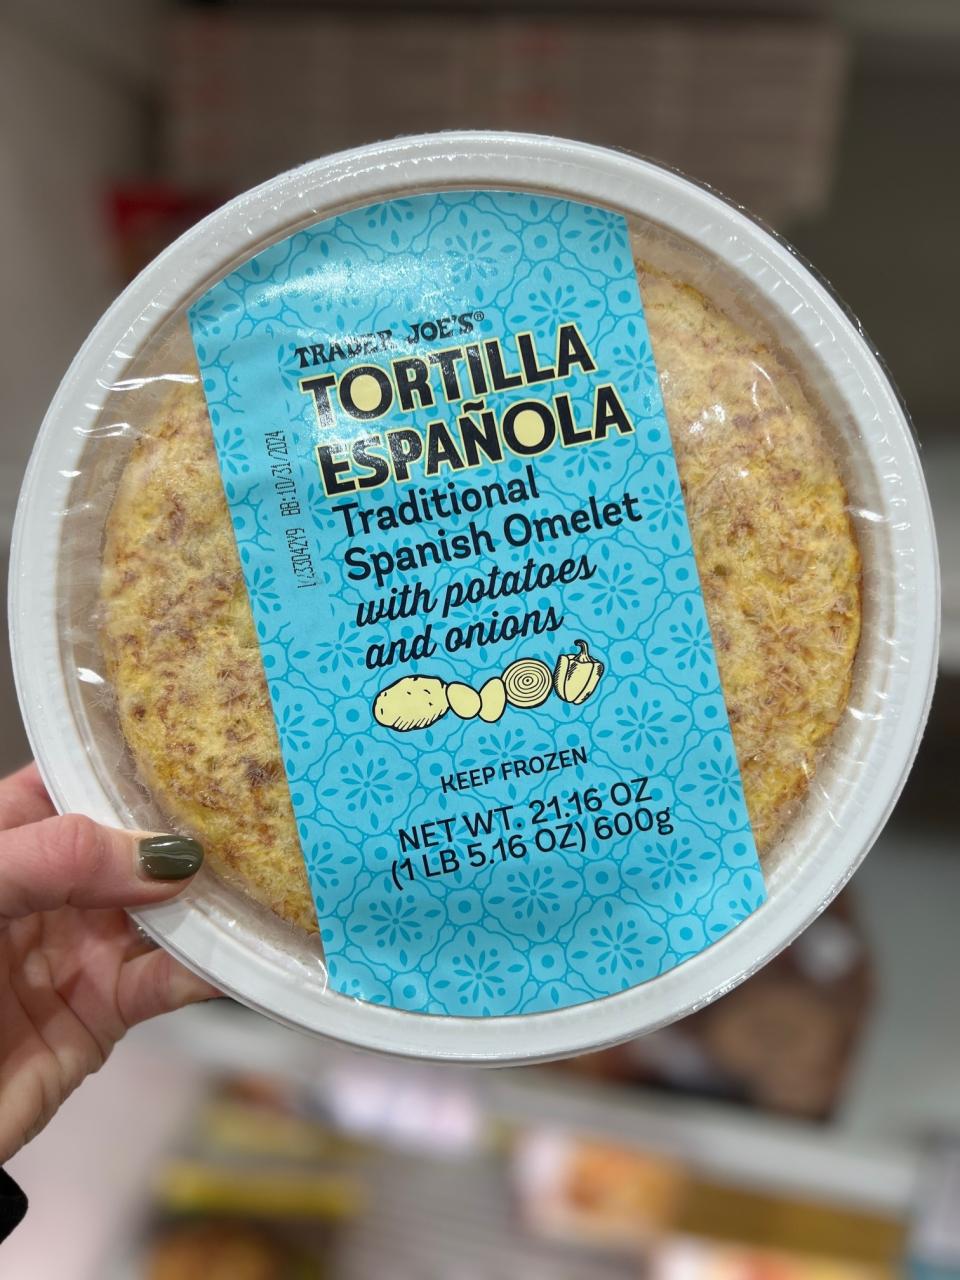 Trader Joe's Tortilla Española in its packaging